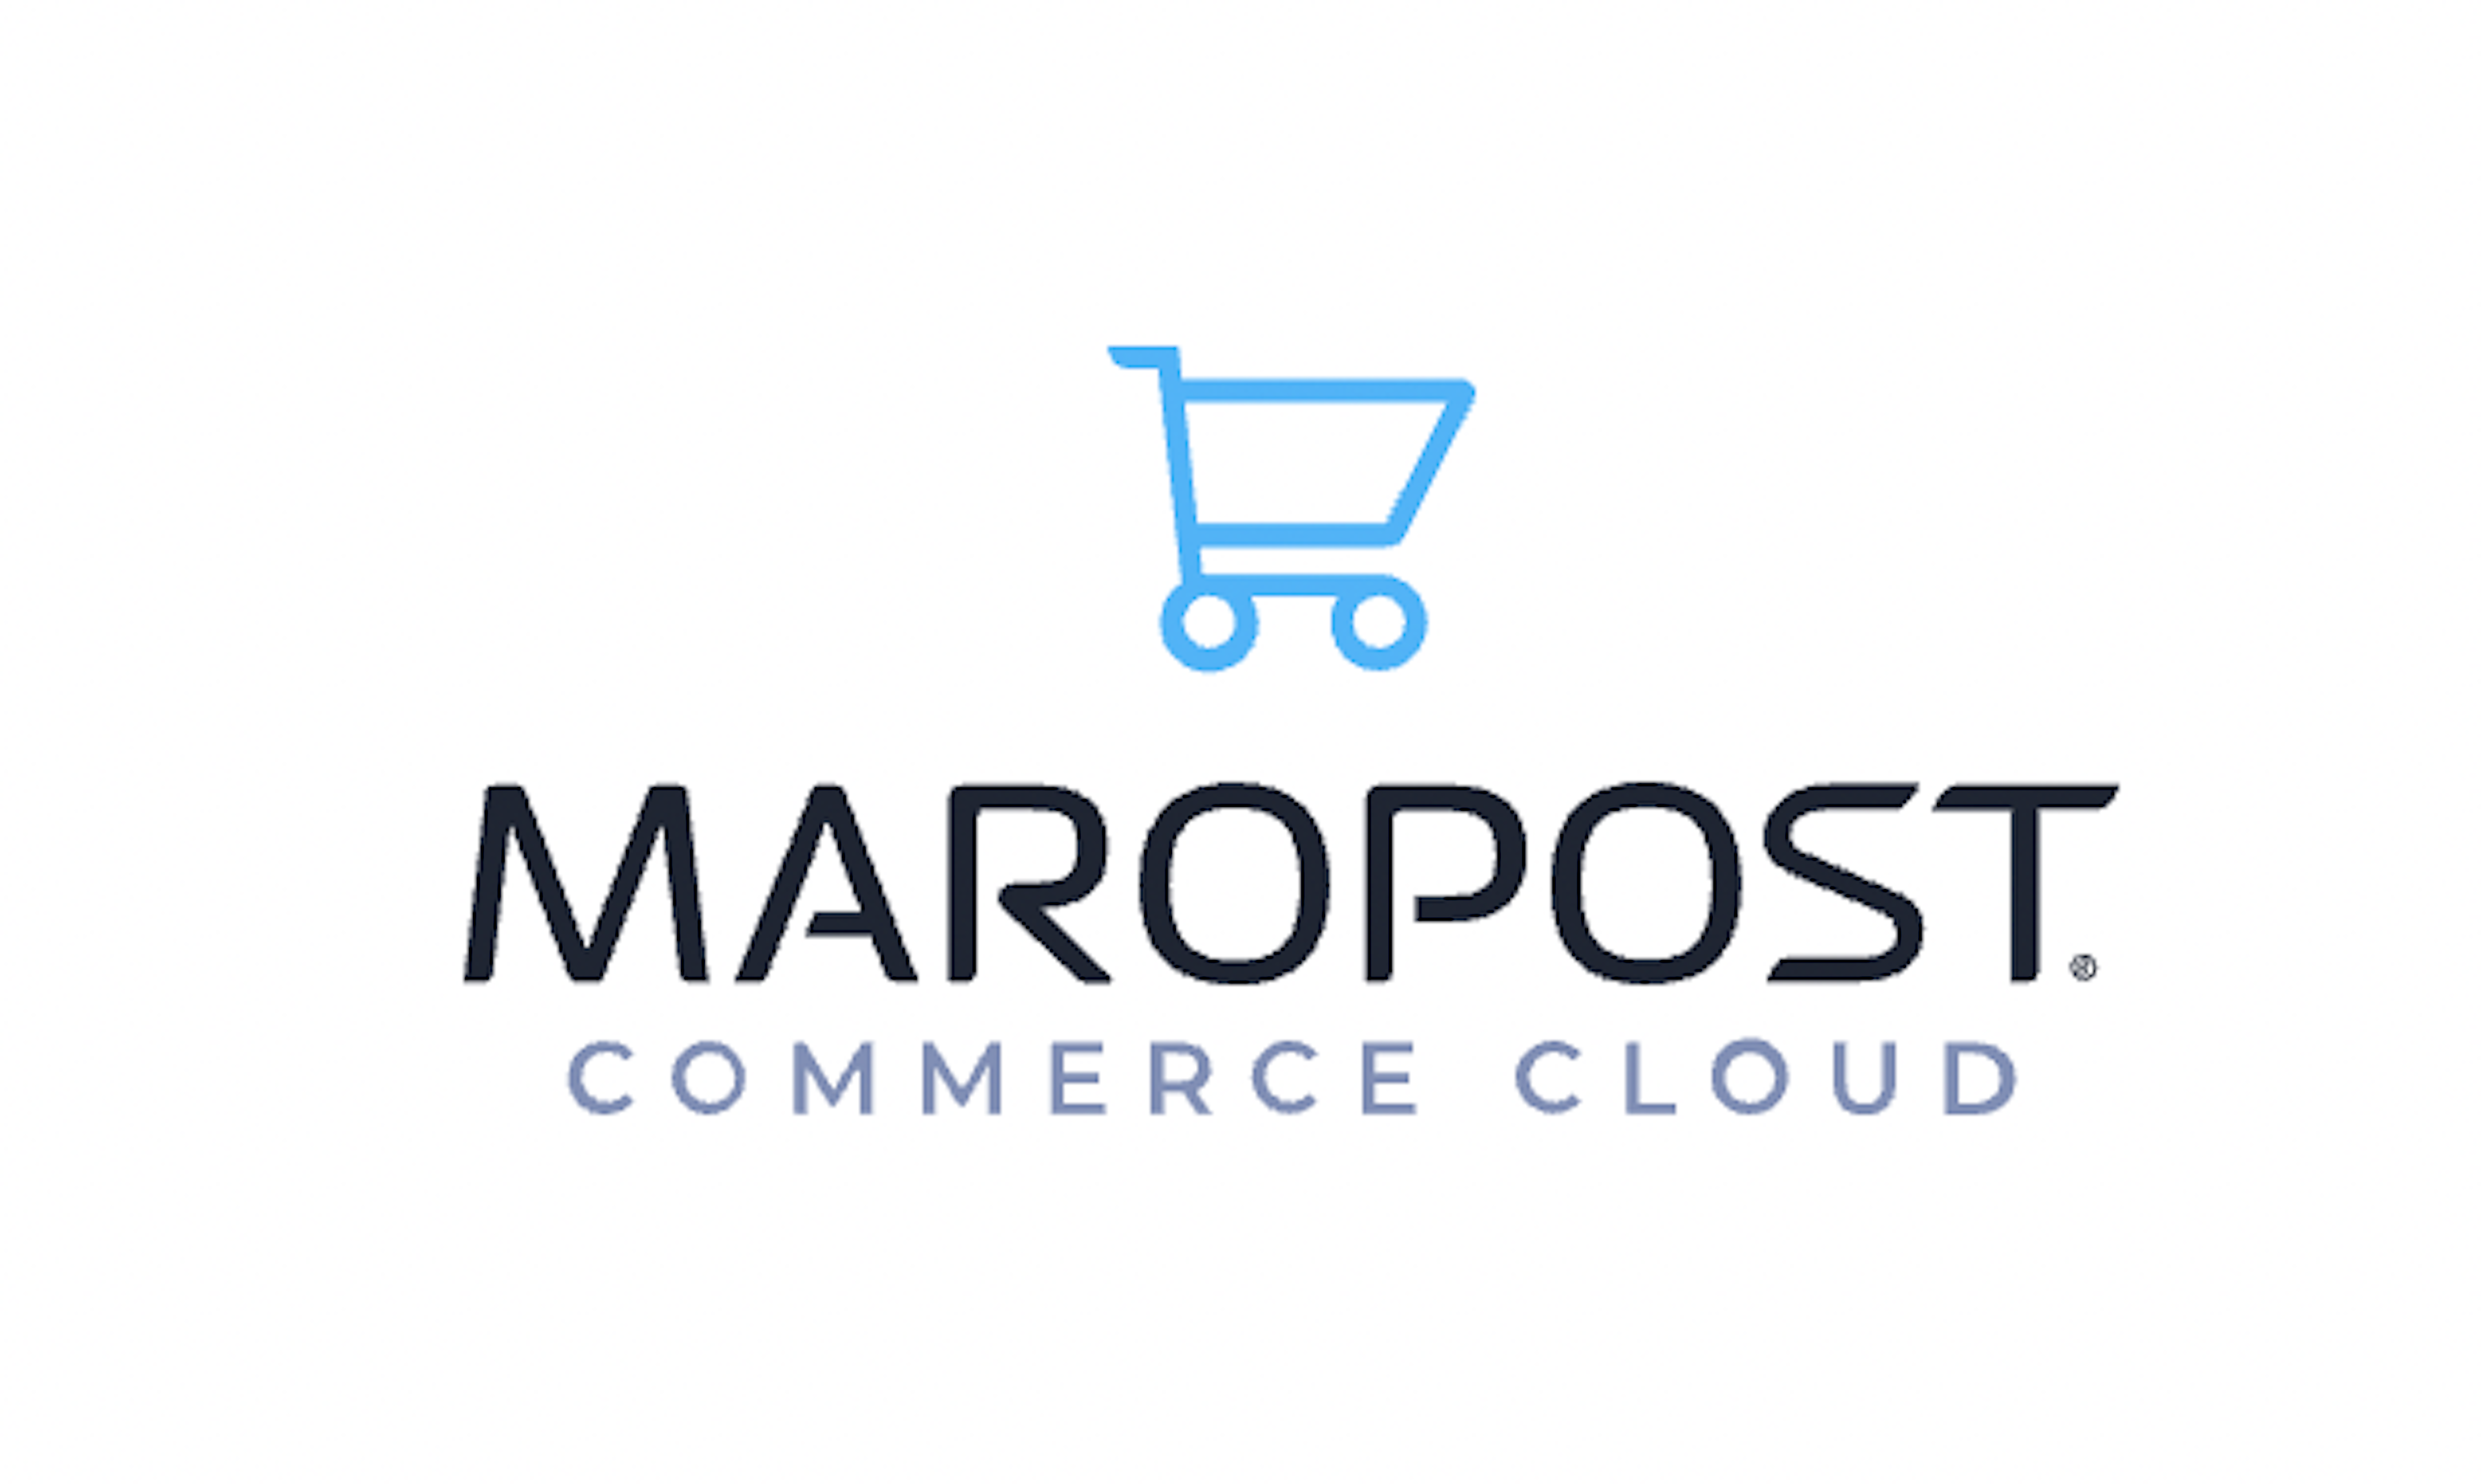 Maropost Commerce Cloud Logo